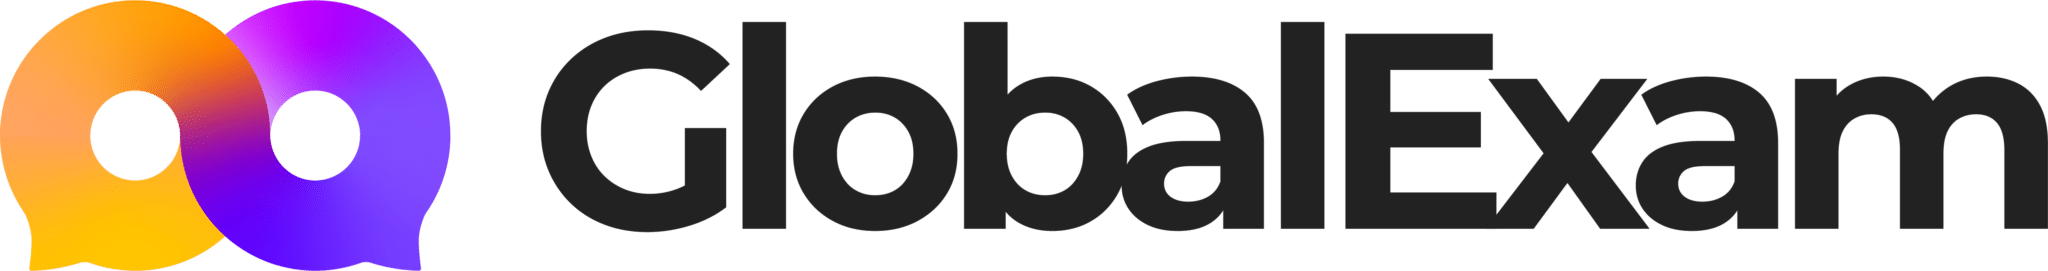 GlobalExam Blog Logo